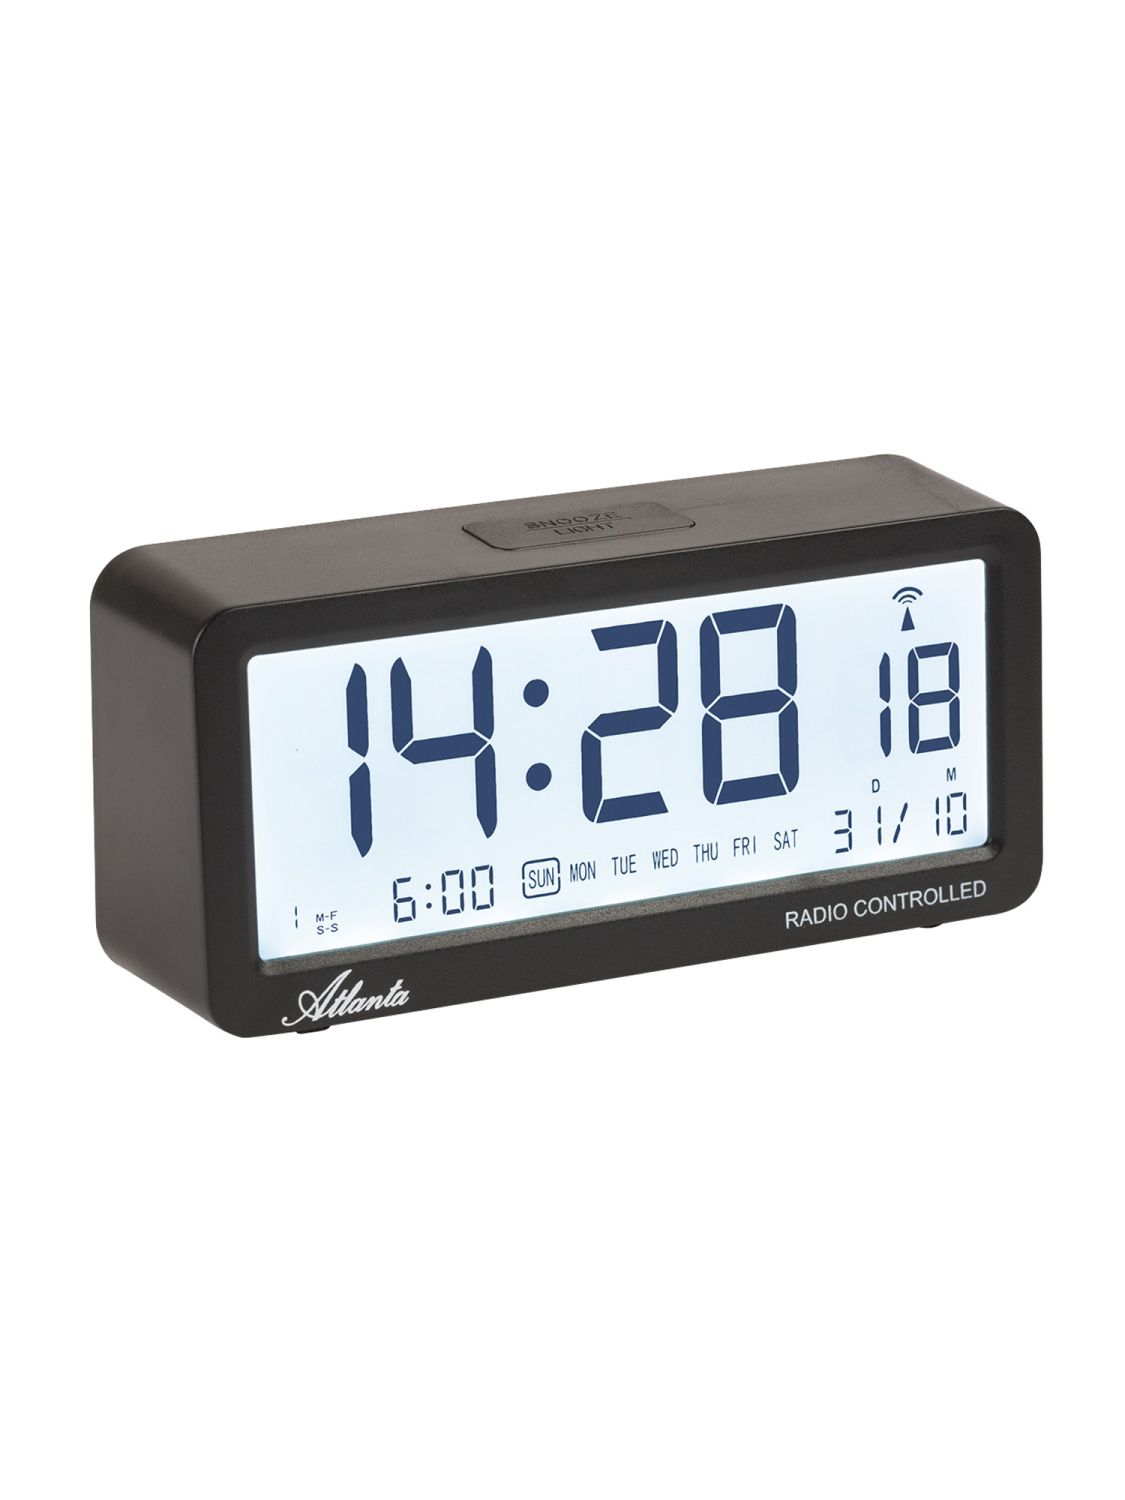 ATLANTA 1879/7 Digital Alarm Clock Radio Controlled Black